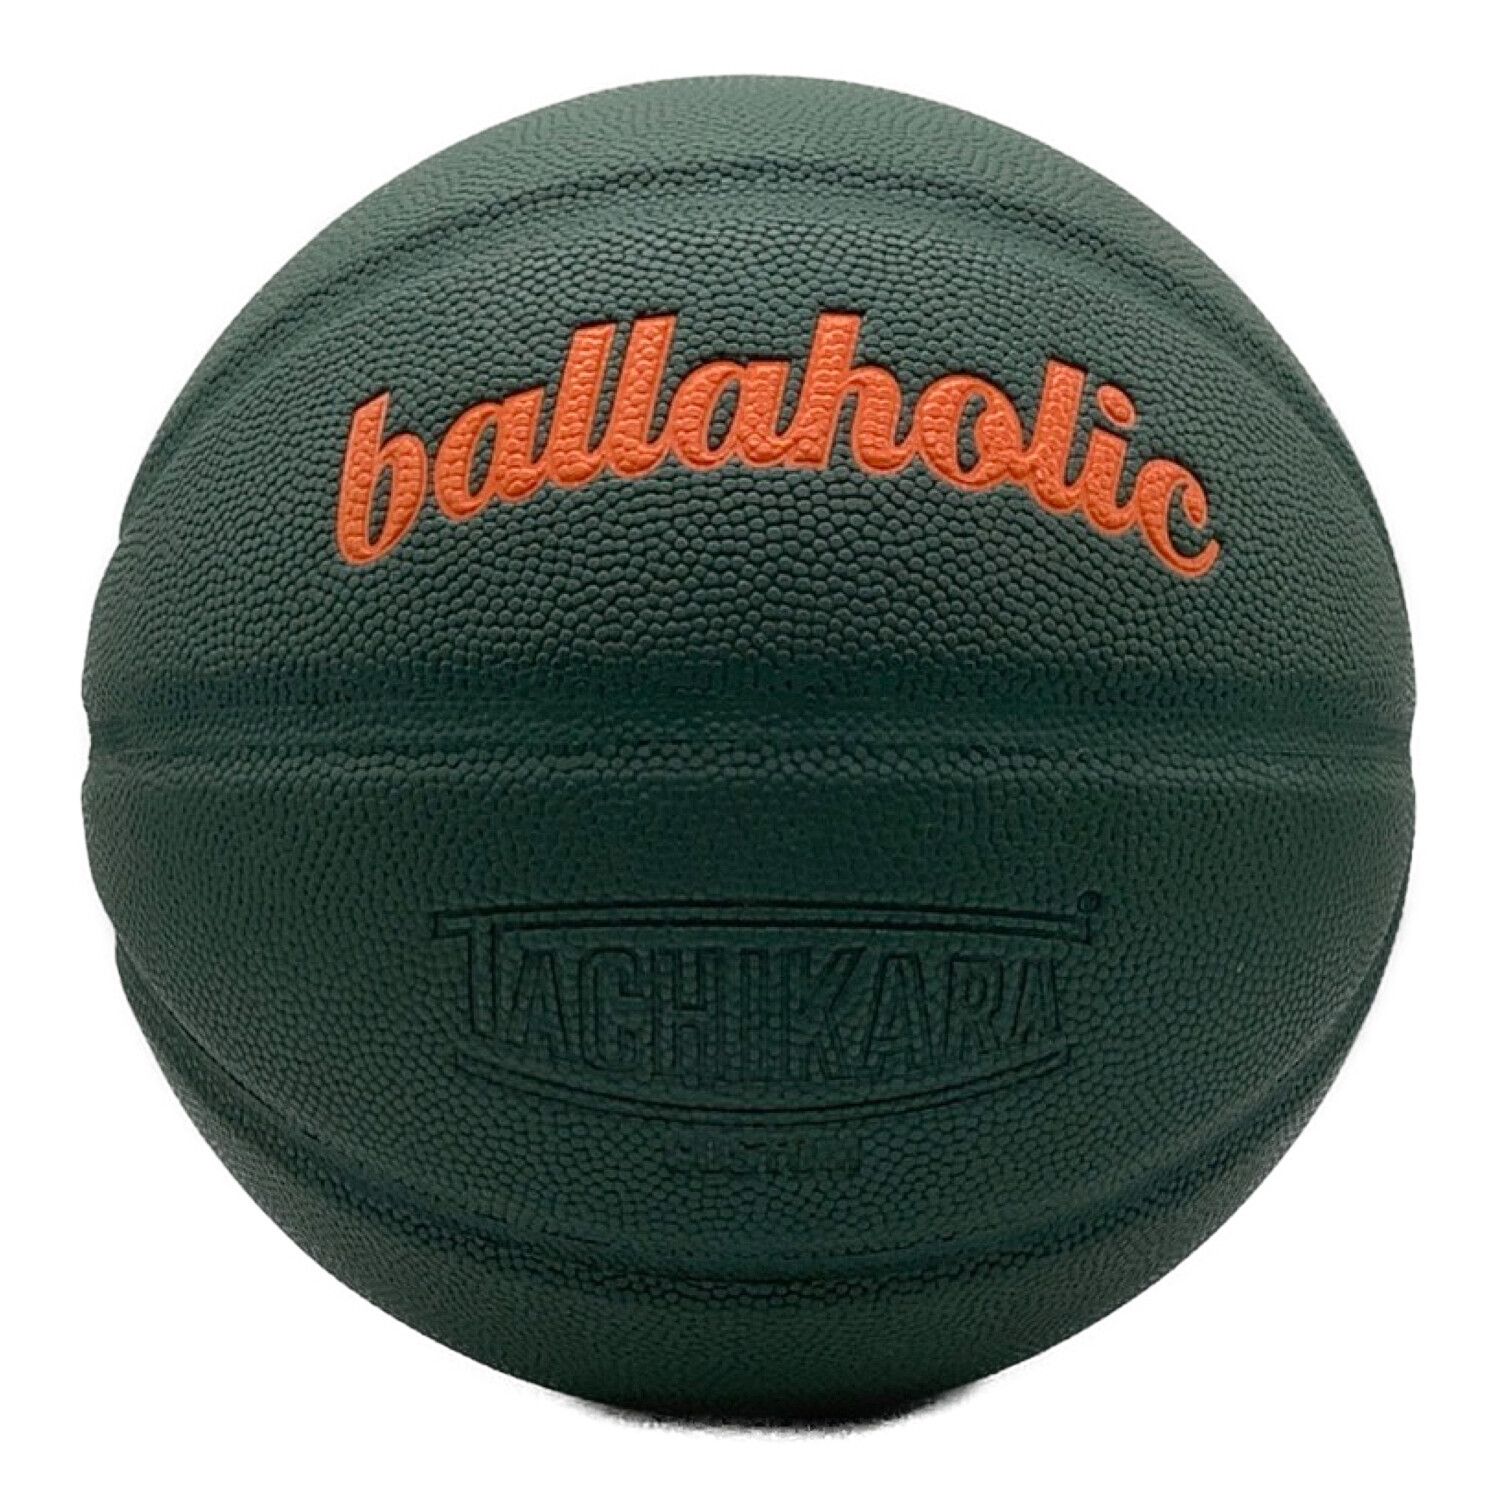 Playground Basketball / ballaholic x TACHIKARA 7号 ボーラホリック 